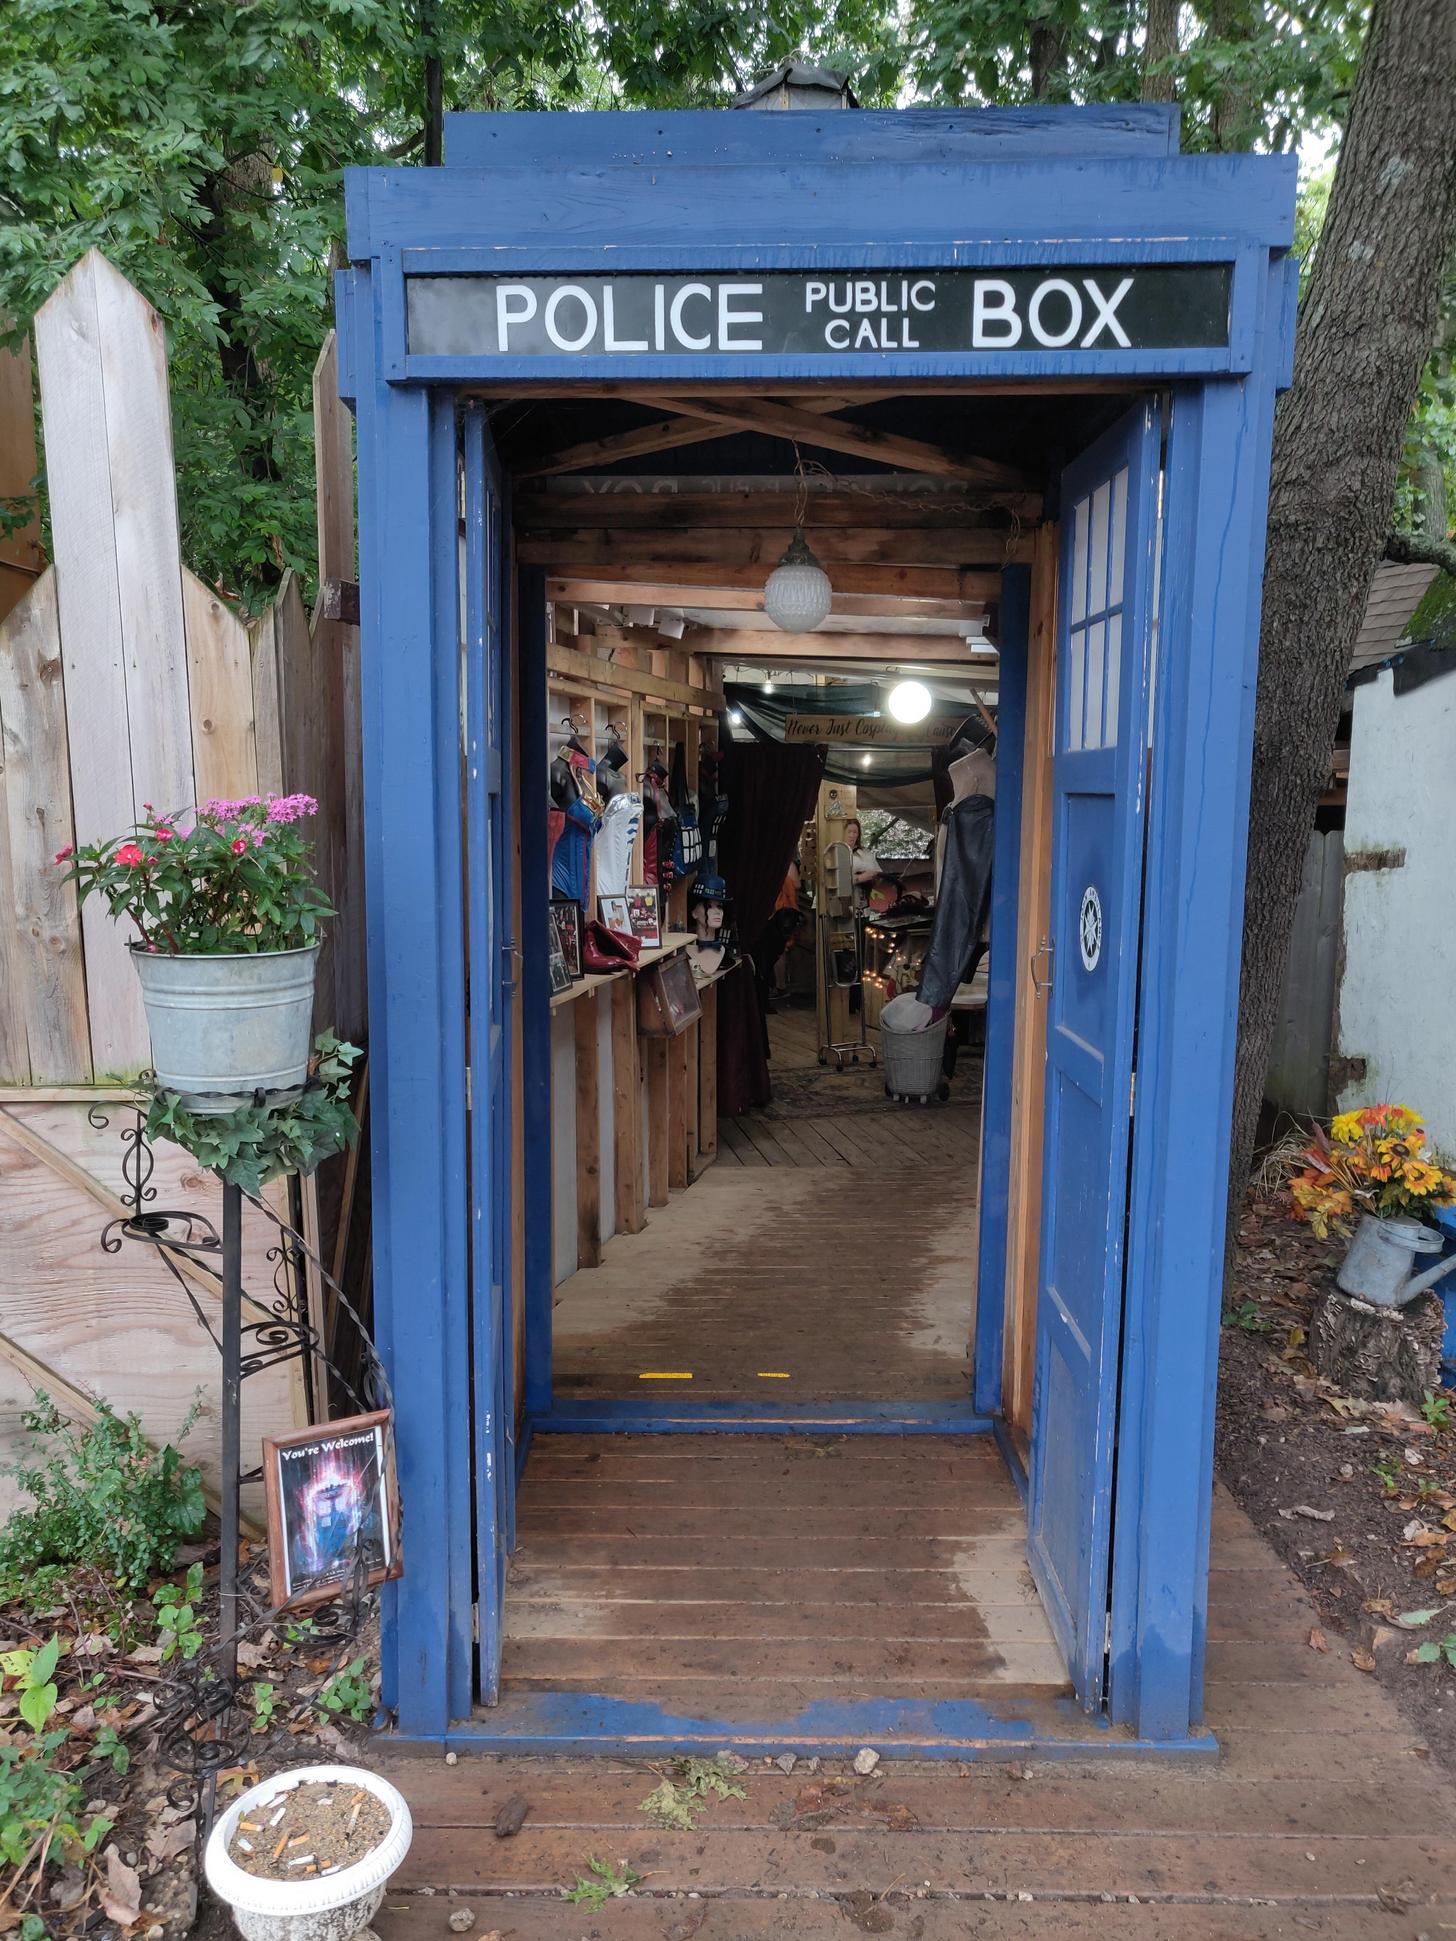 shed - Police Porllc Box